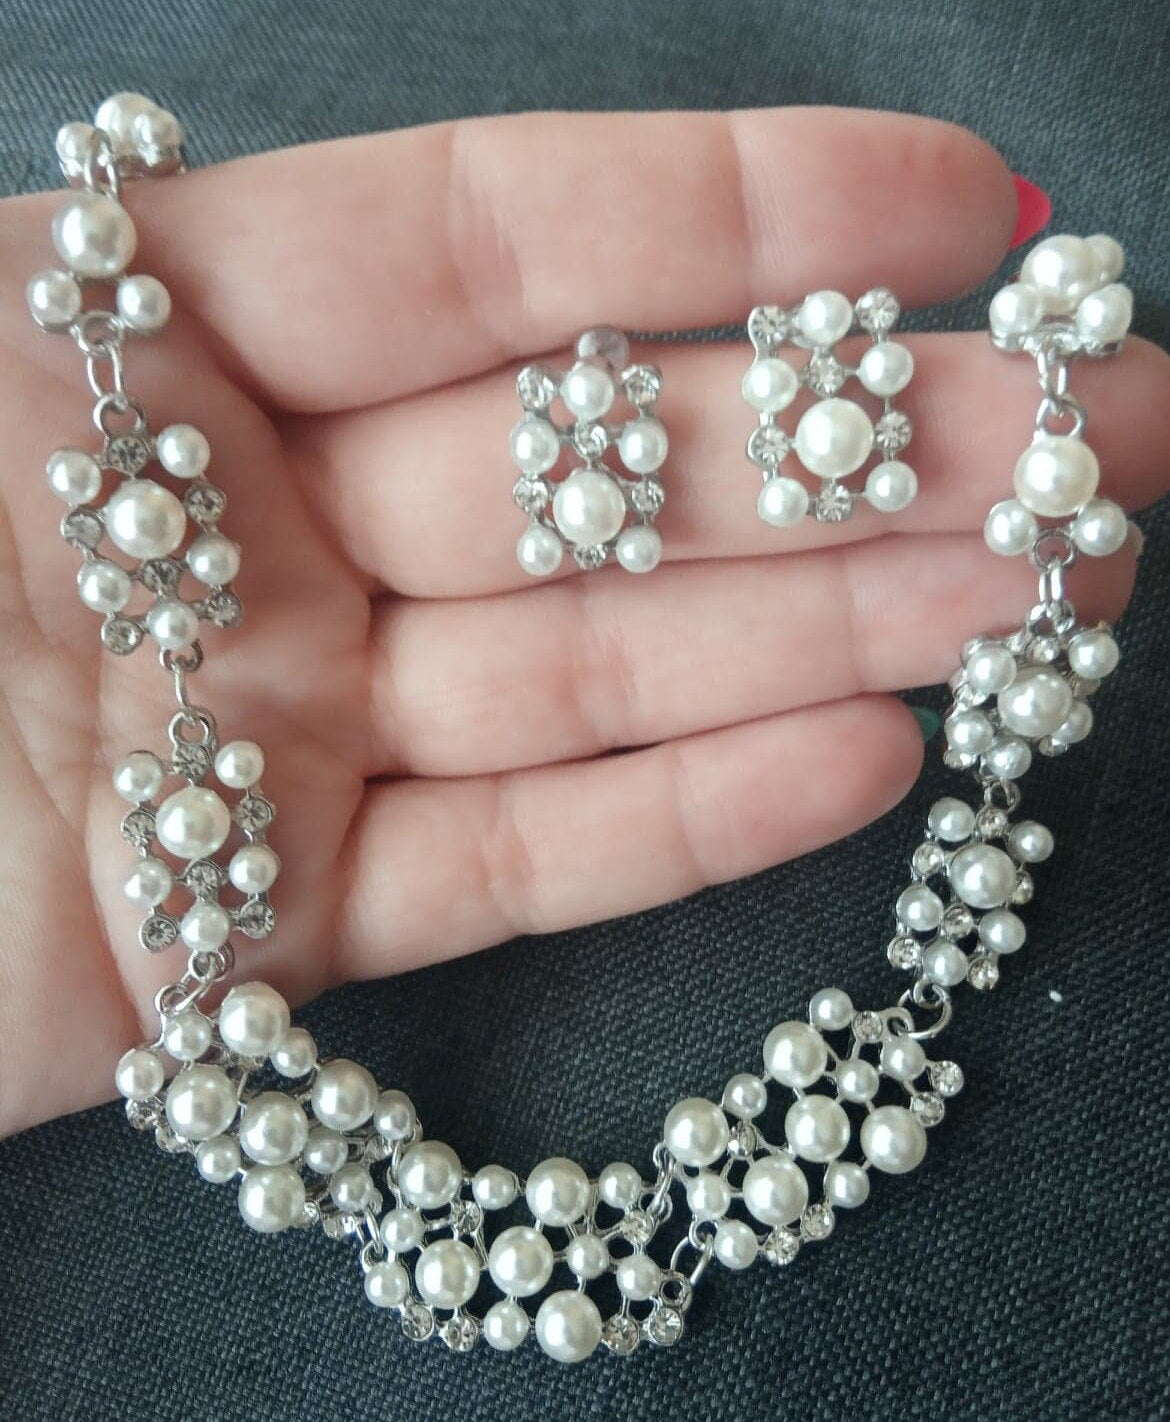 Simple Imitation Pearl Elegant Bridal Jewelry Crystal  Jewelry Sets